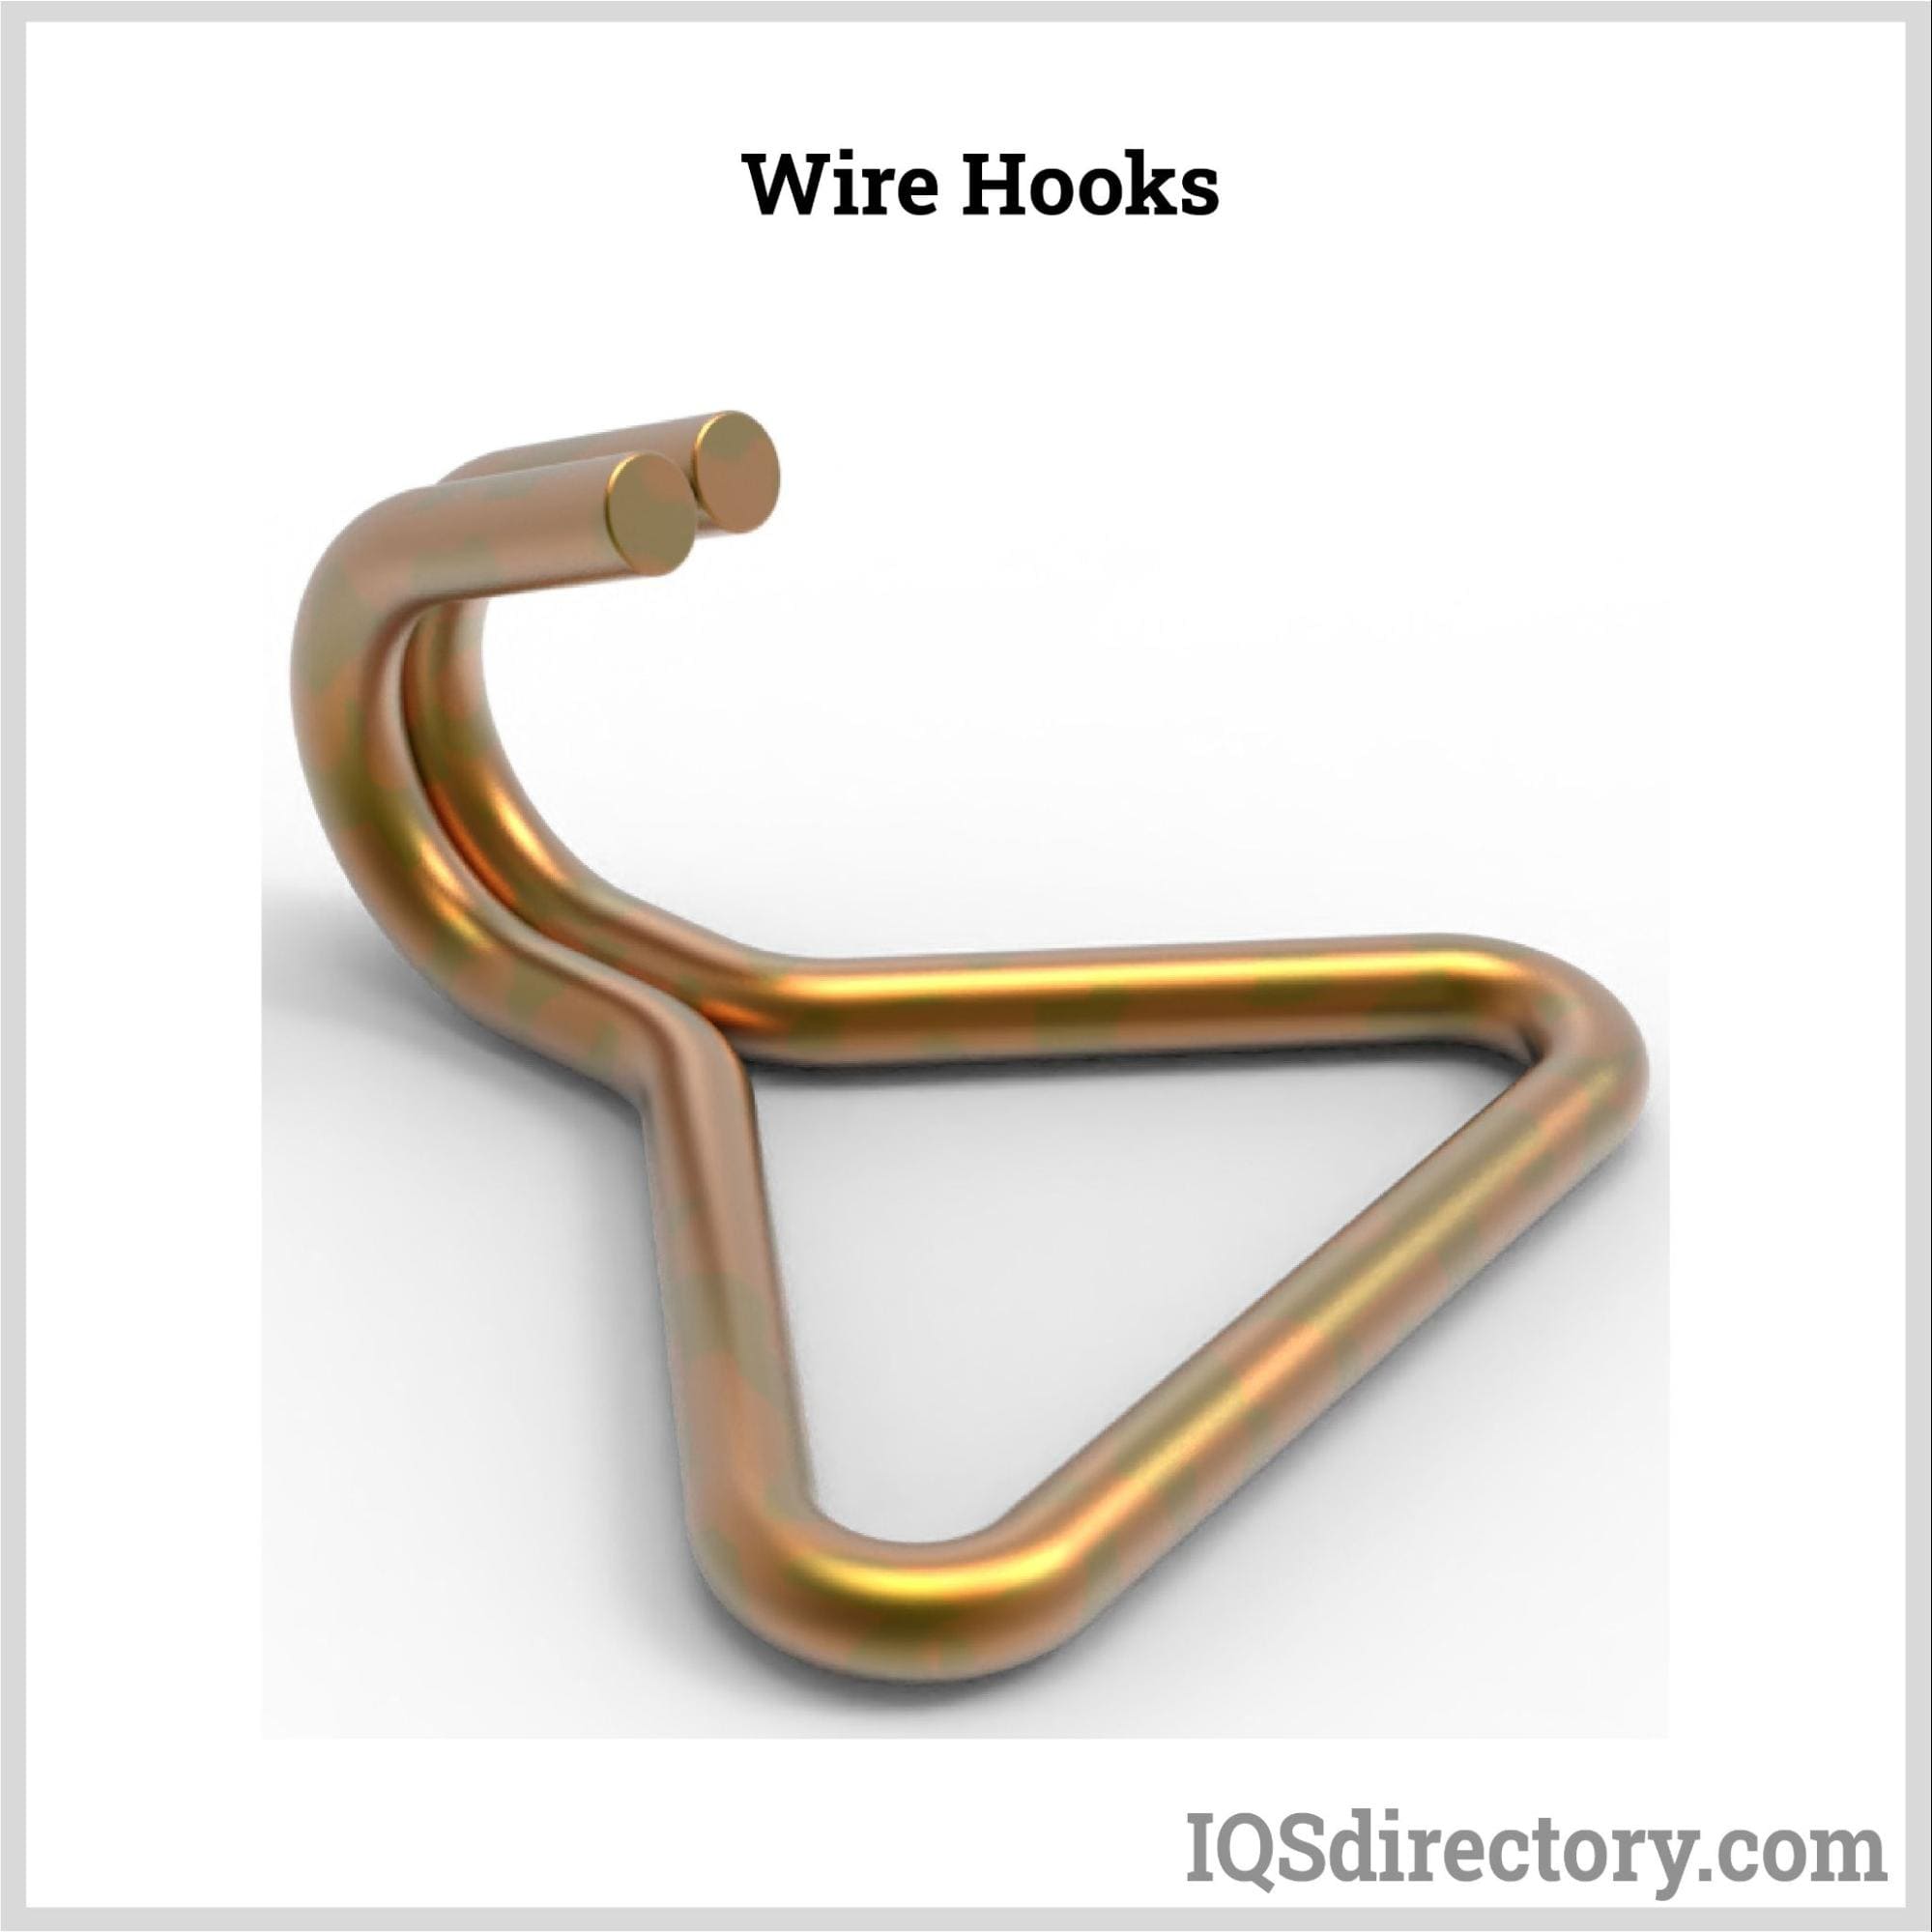 Wire Hooks